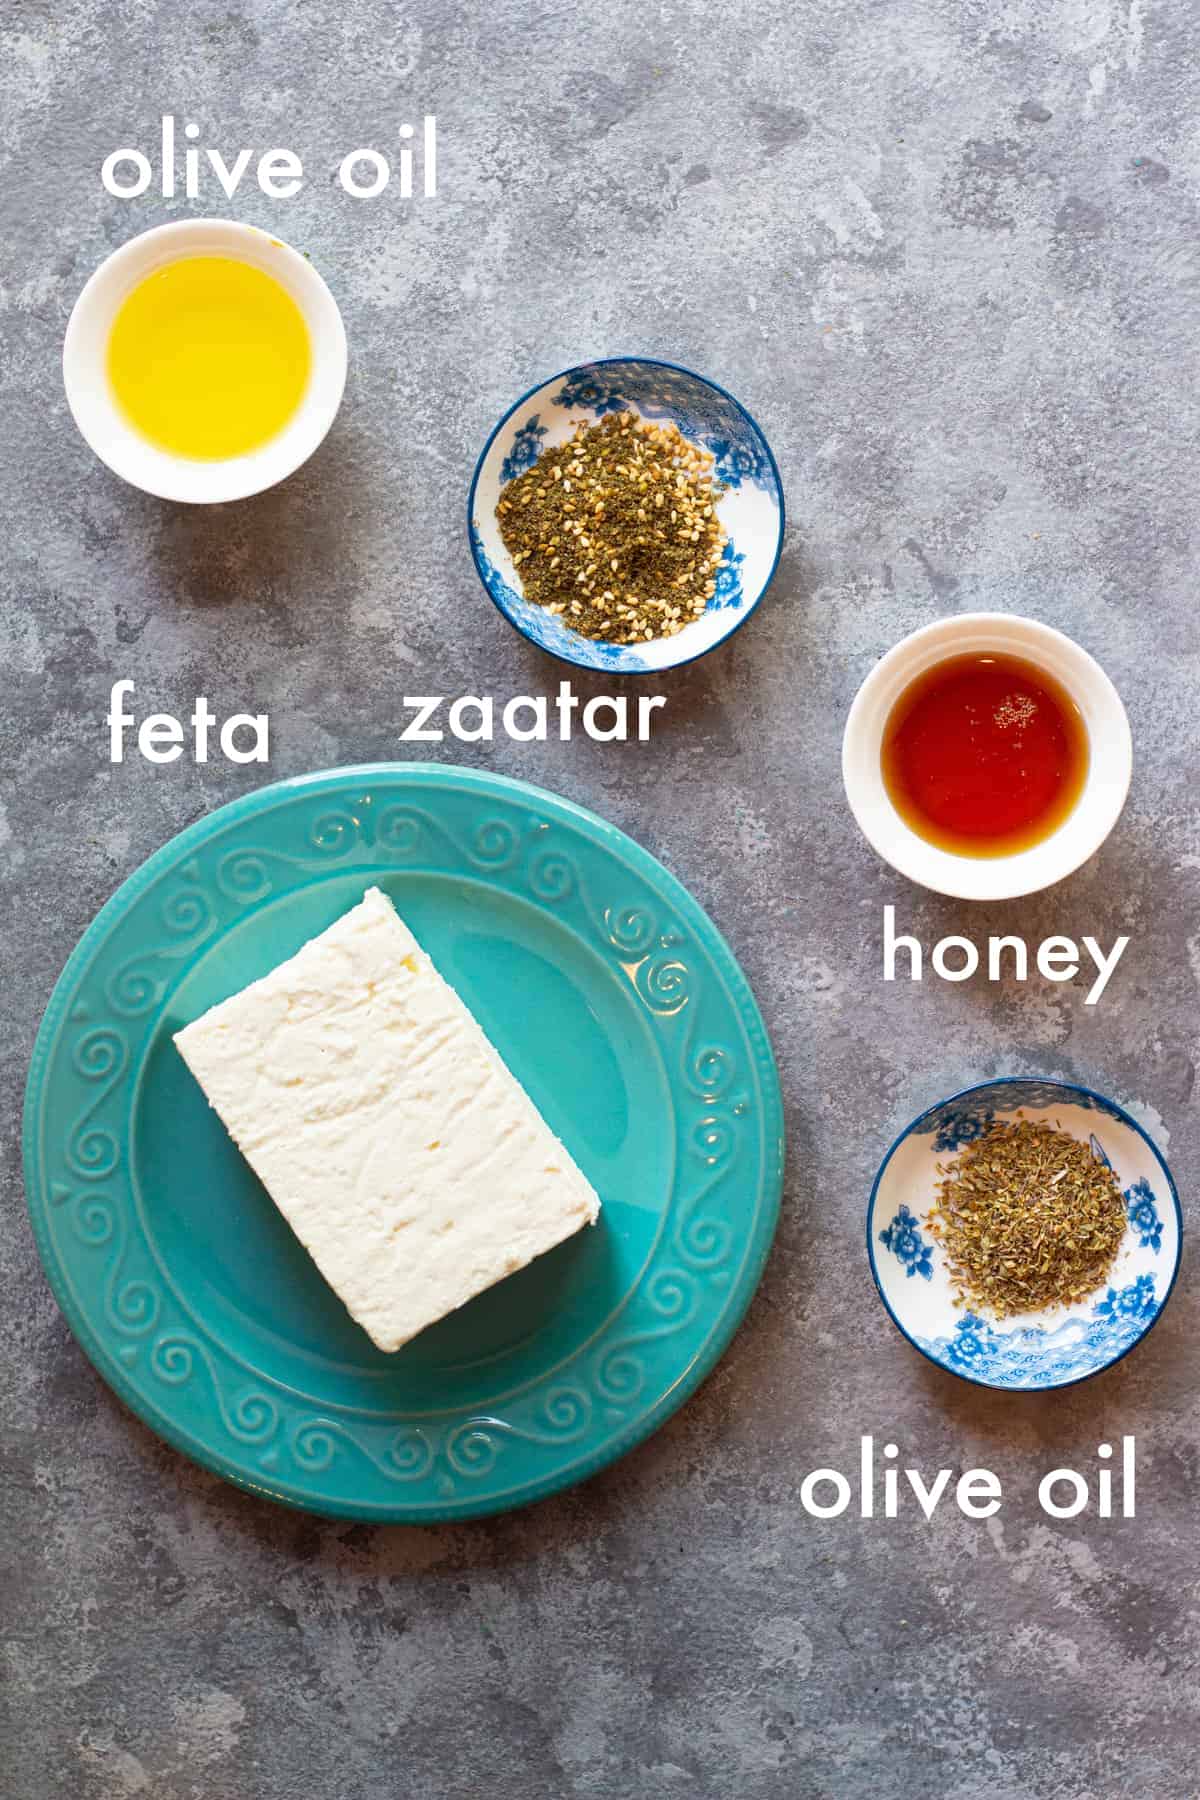 To make this recipe you need feta, zaatar, honey, olive oil and oregano. 